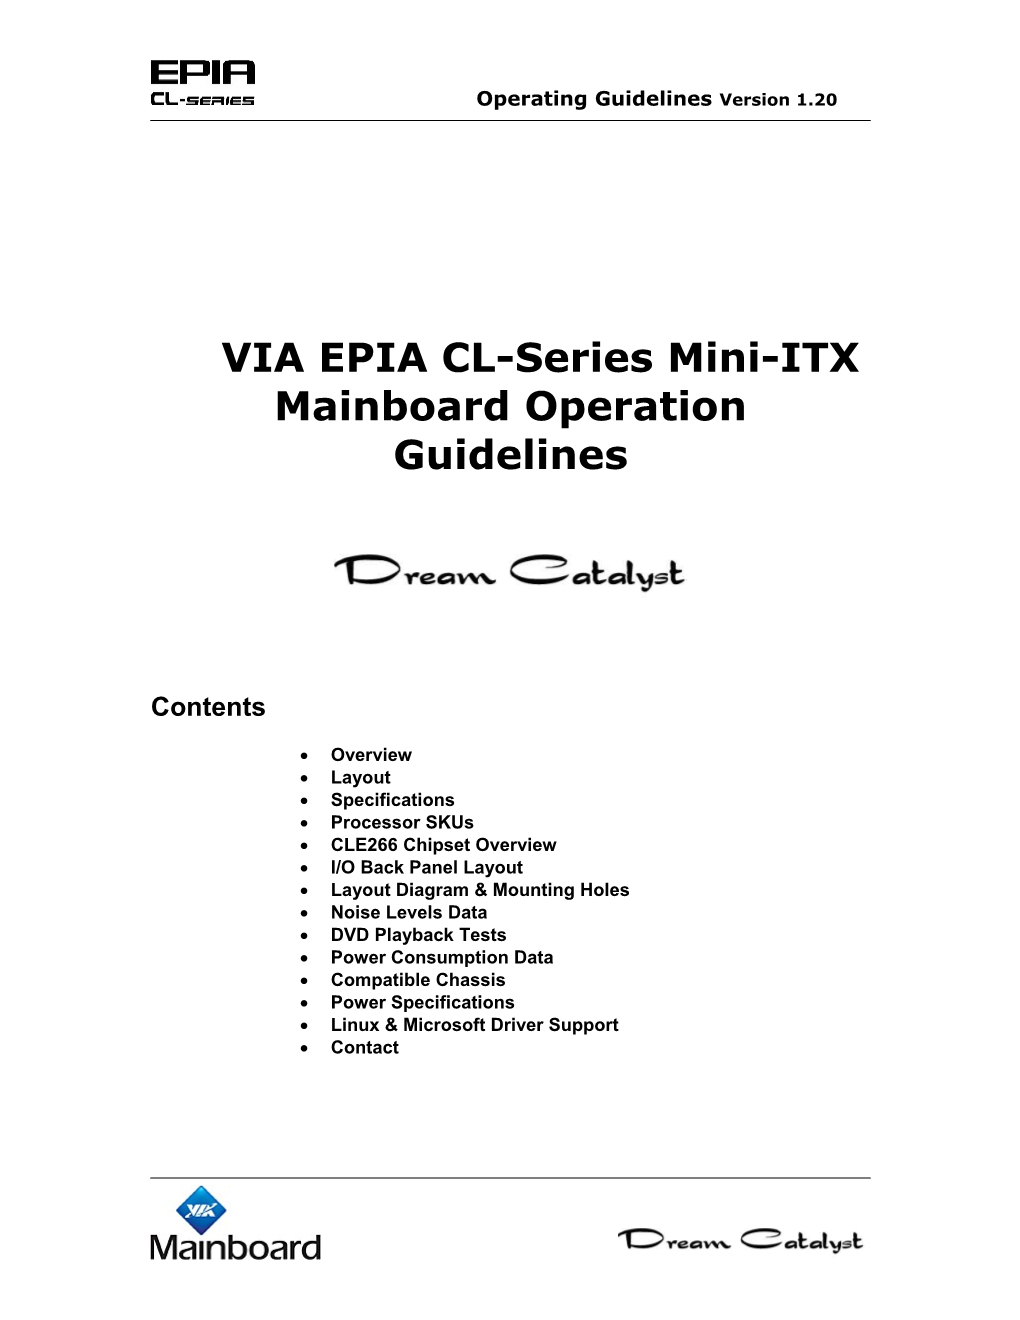 VIA EPIA CL-Series Mini-ITX Mainboard Operation Guidelines